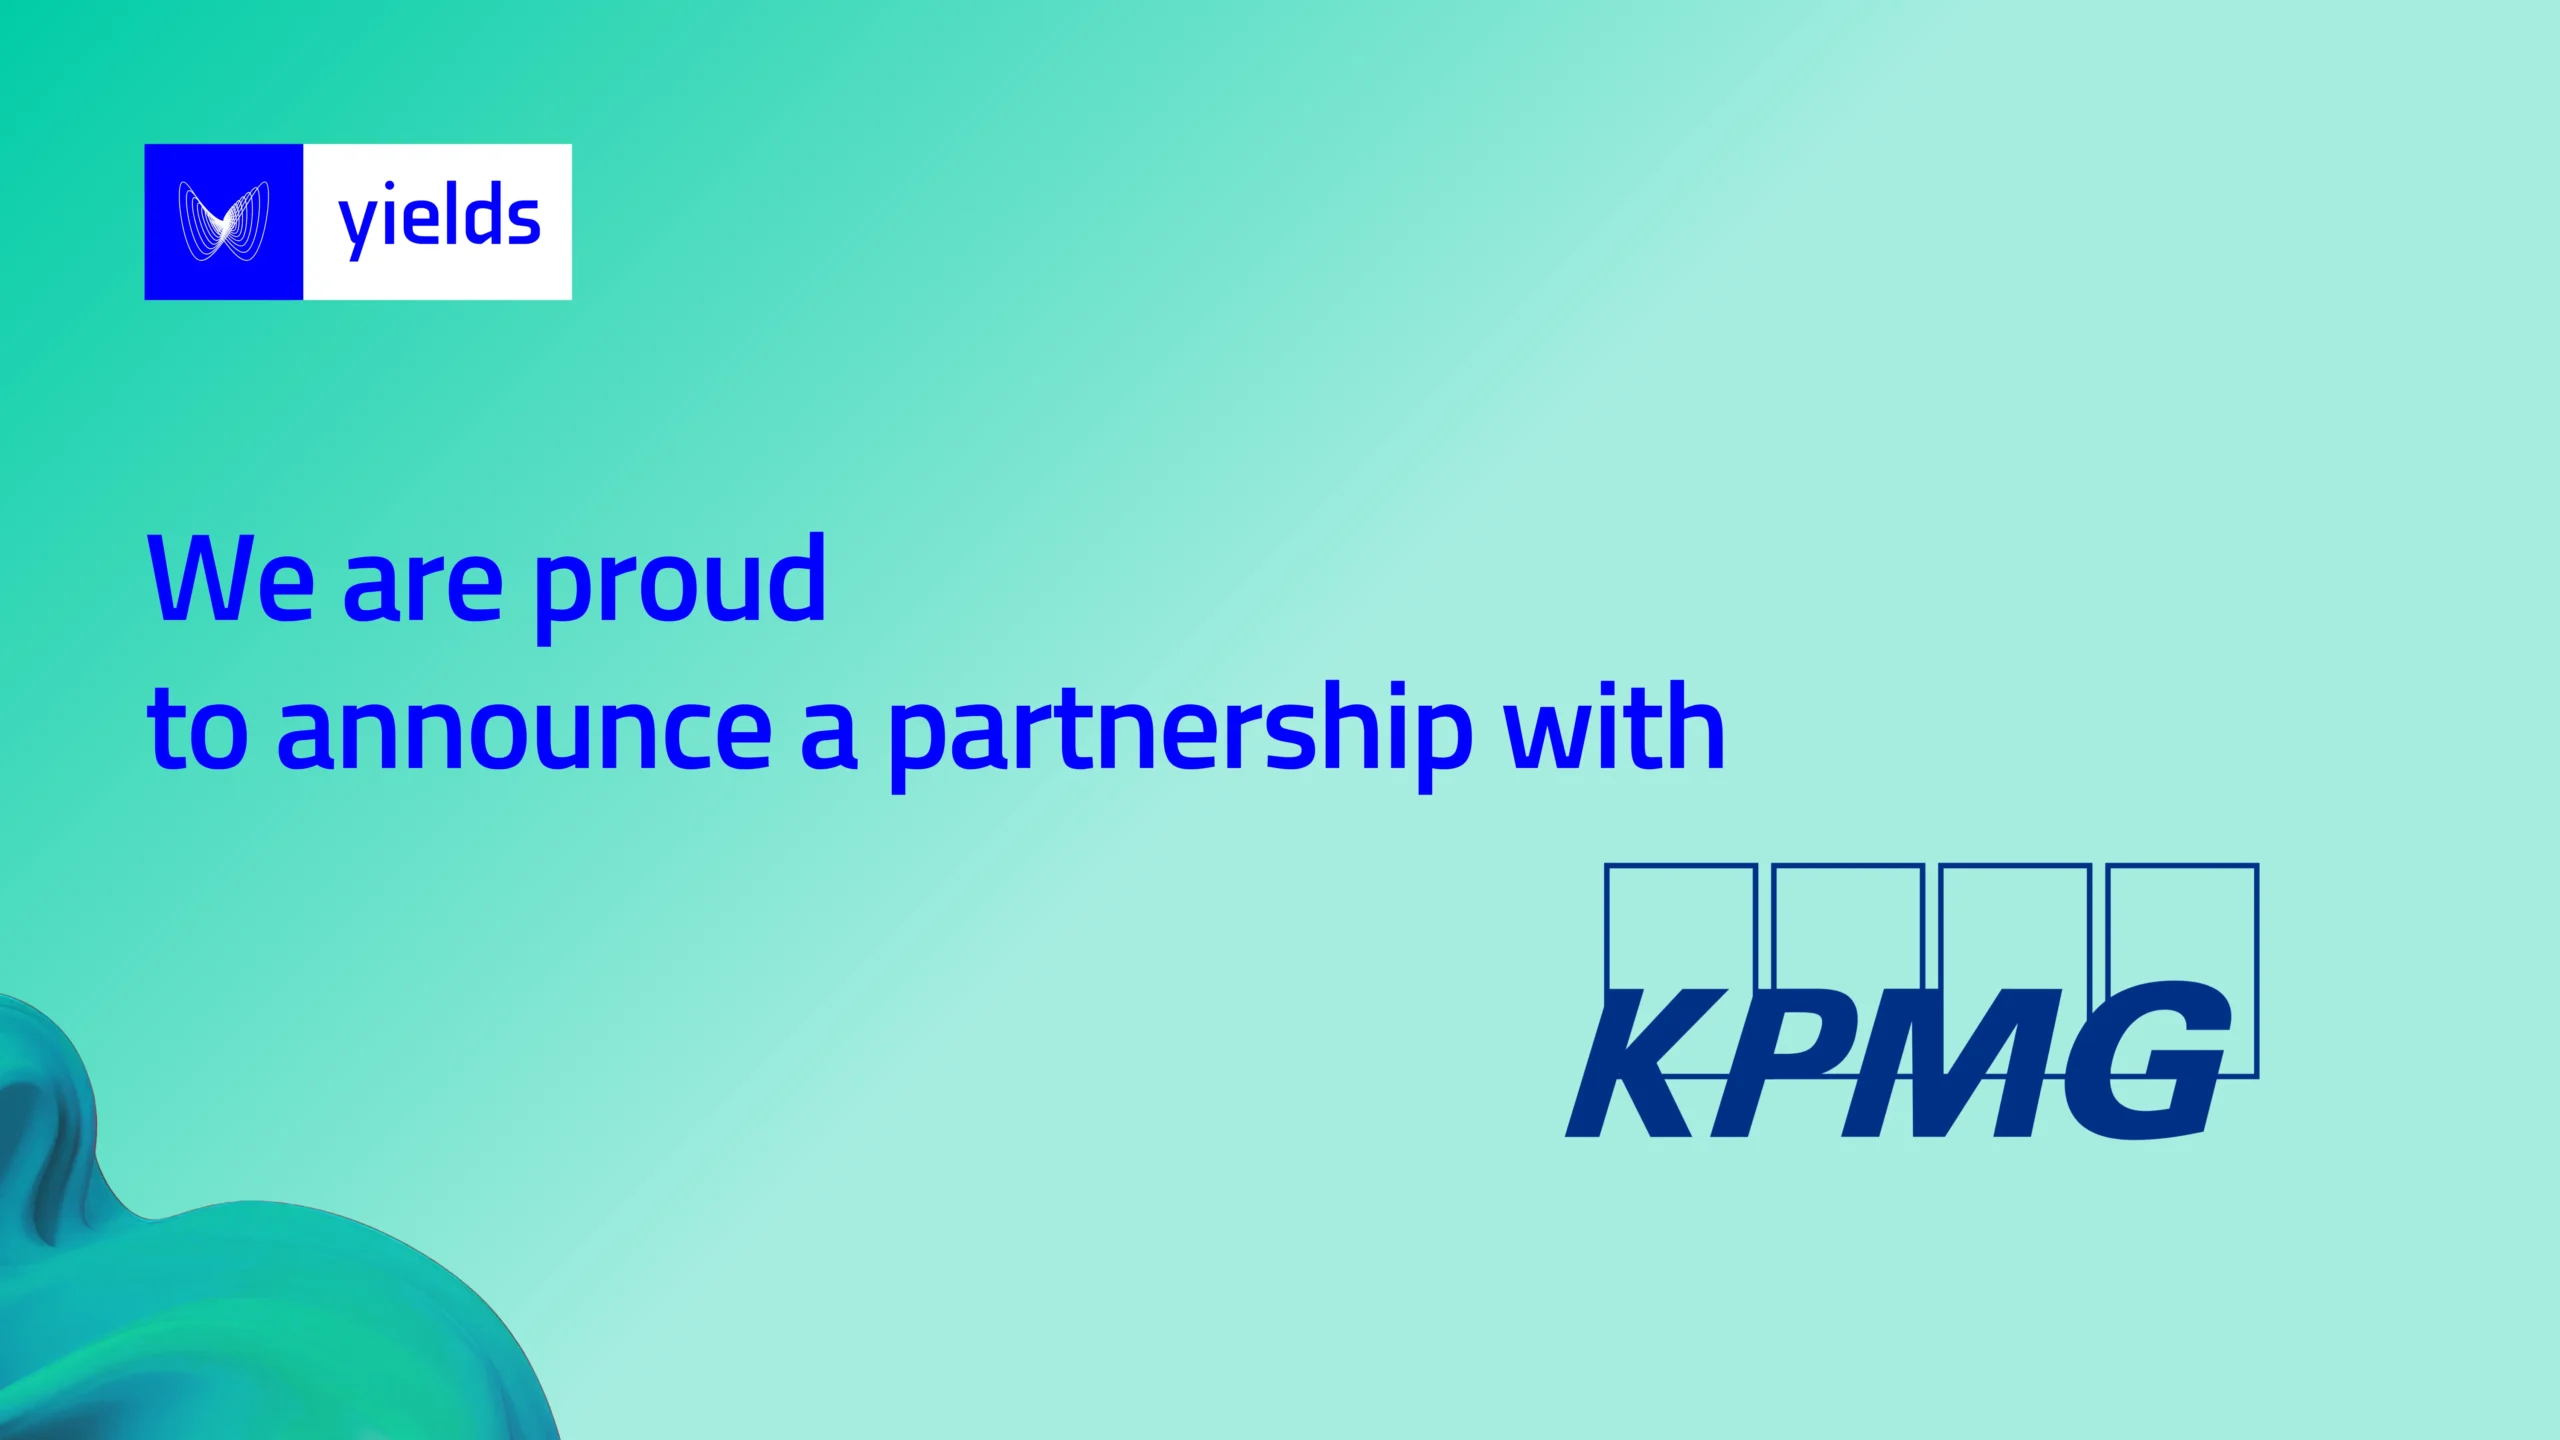 KPMG and Yields announce Strategic Partnership